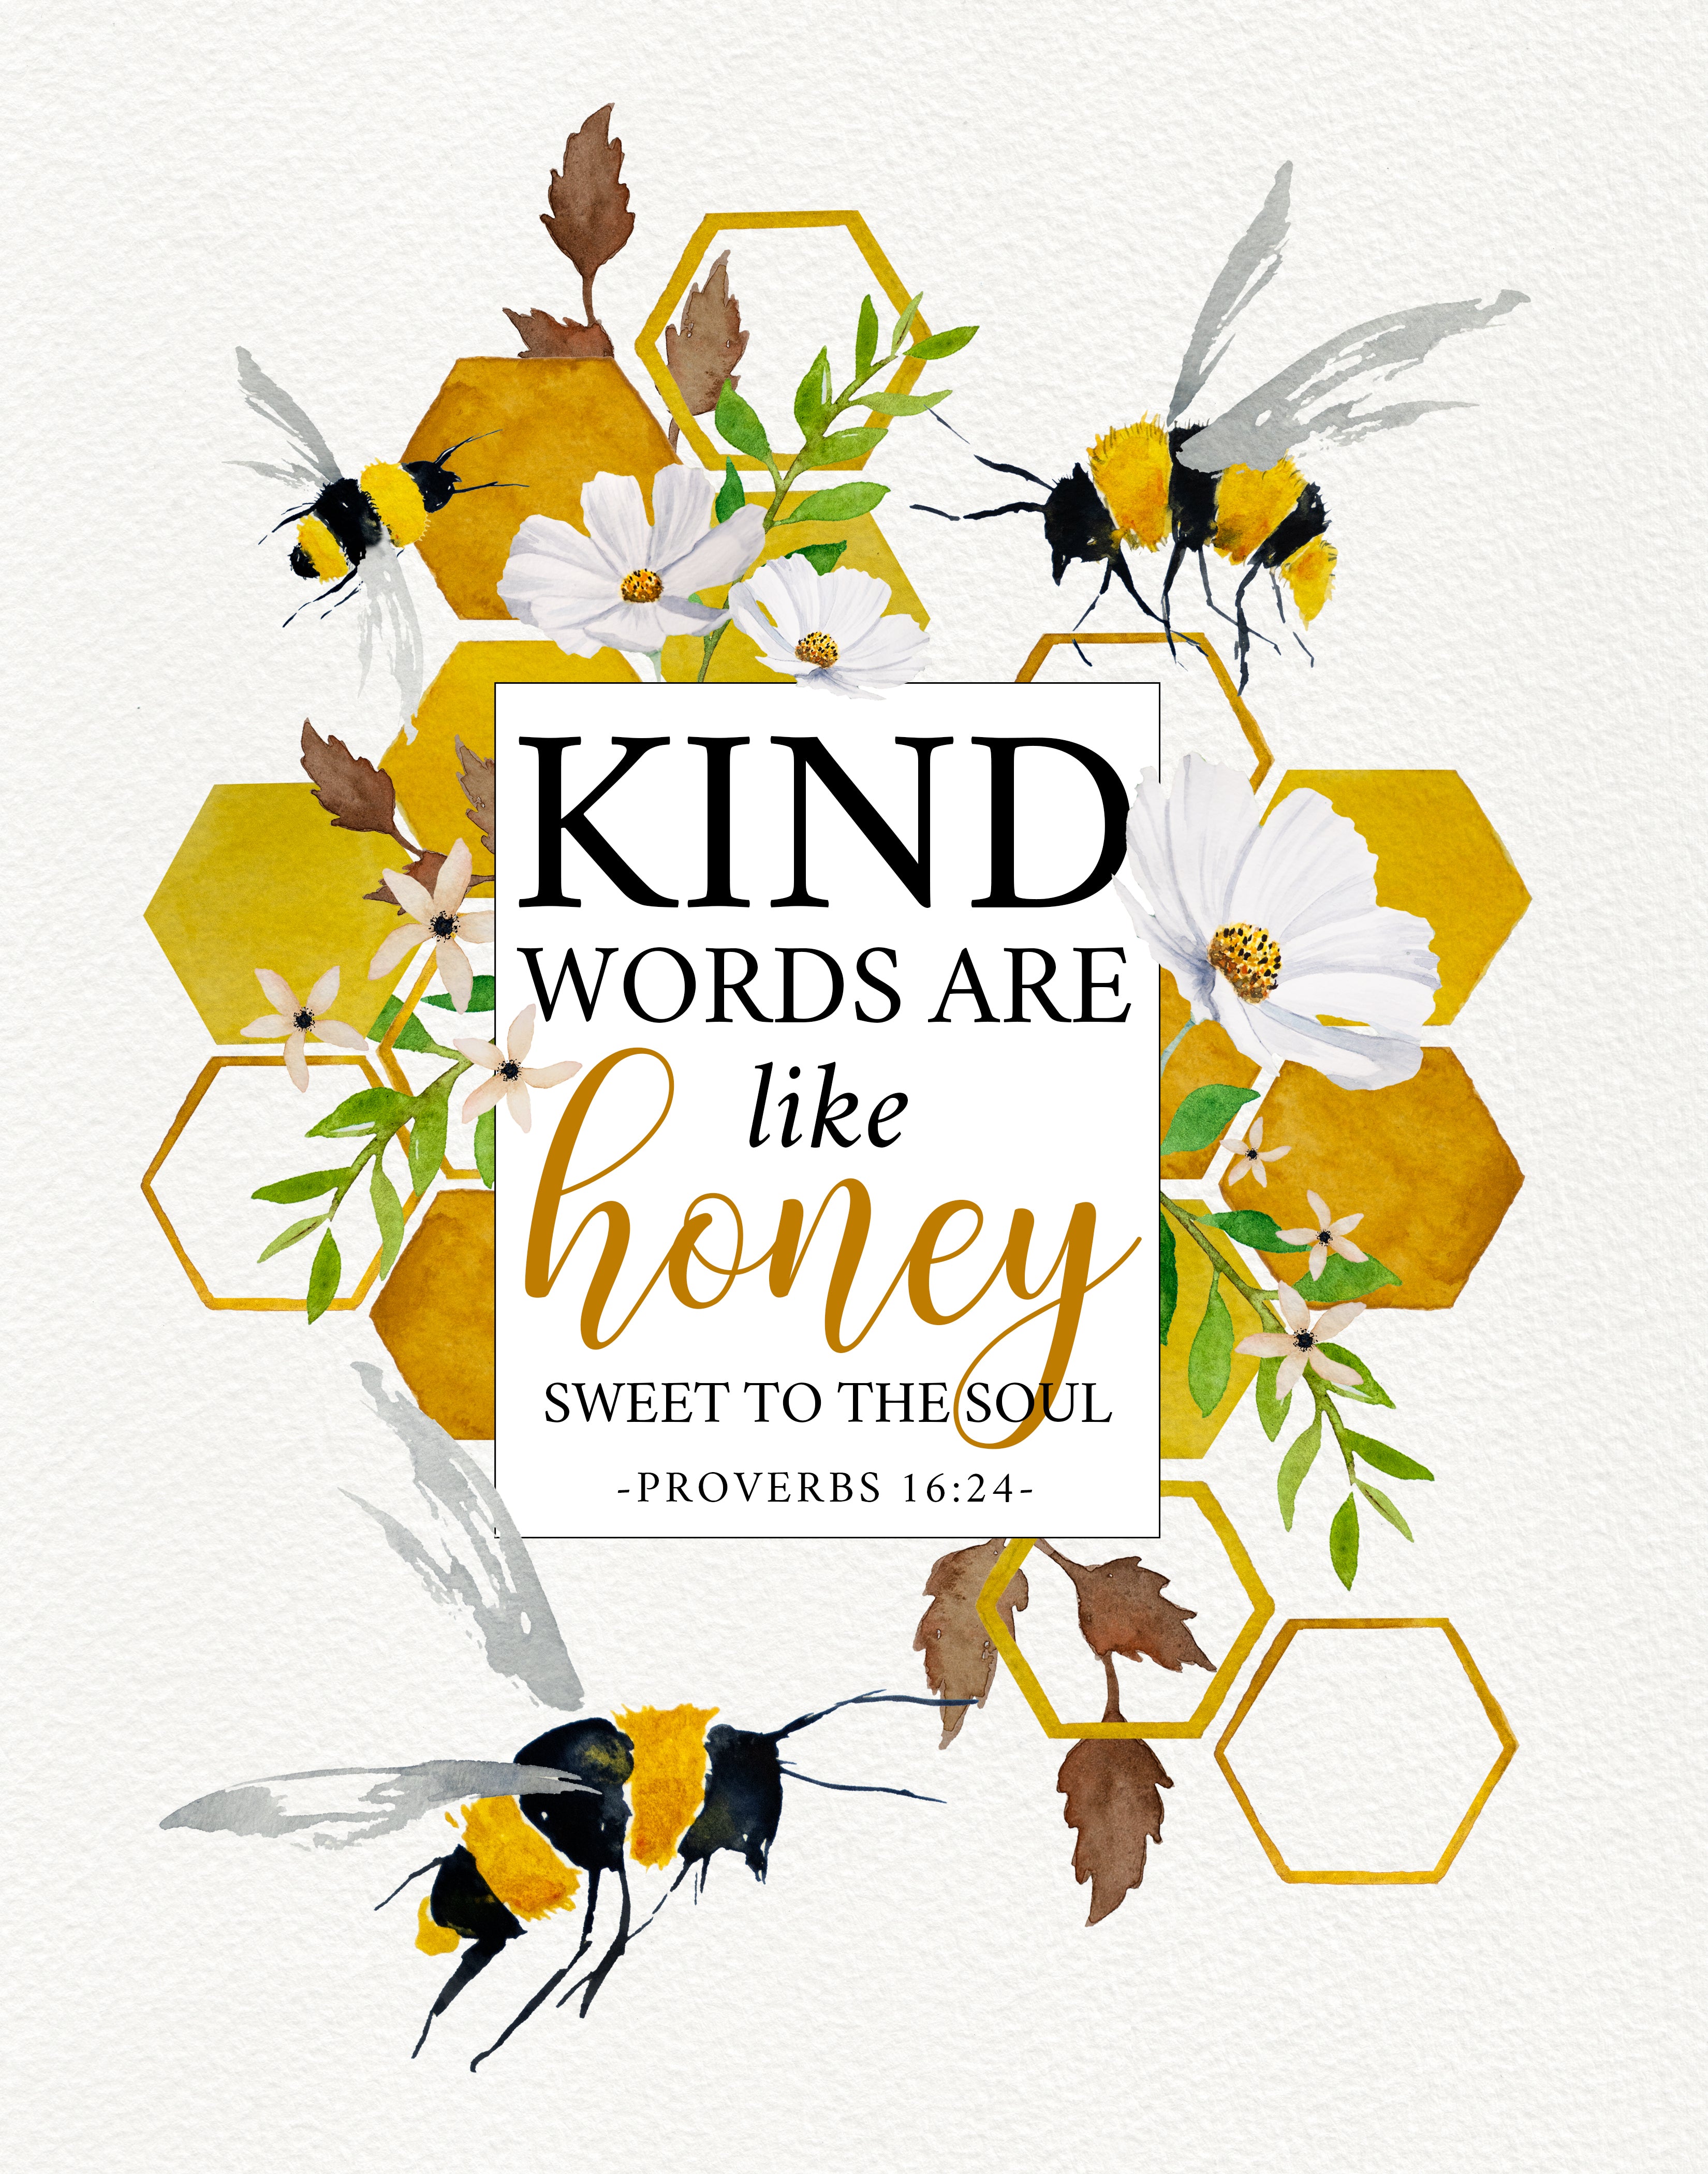 Kind Words - Digital Art Print